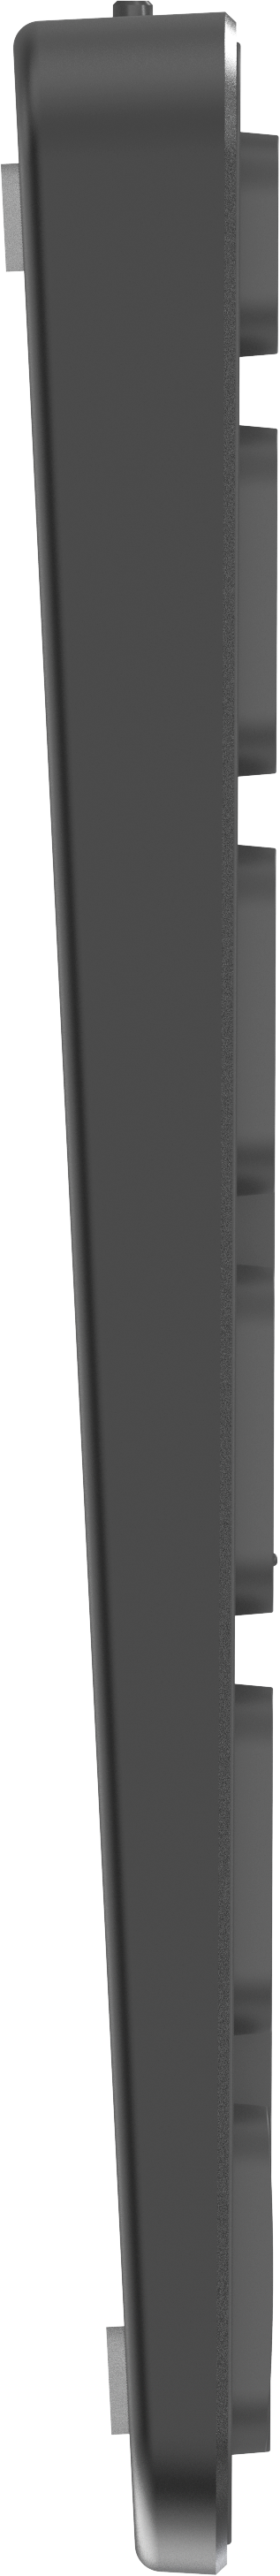 Teclado Rapoo E9700M Multi-mode Wireless Ultra-slim PT Dark Grey